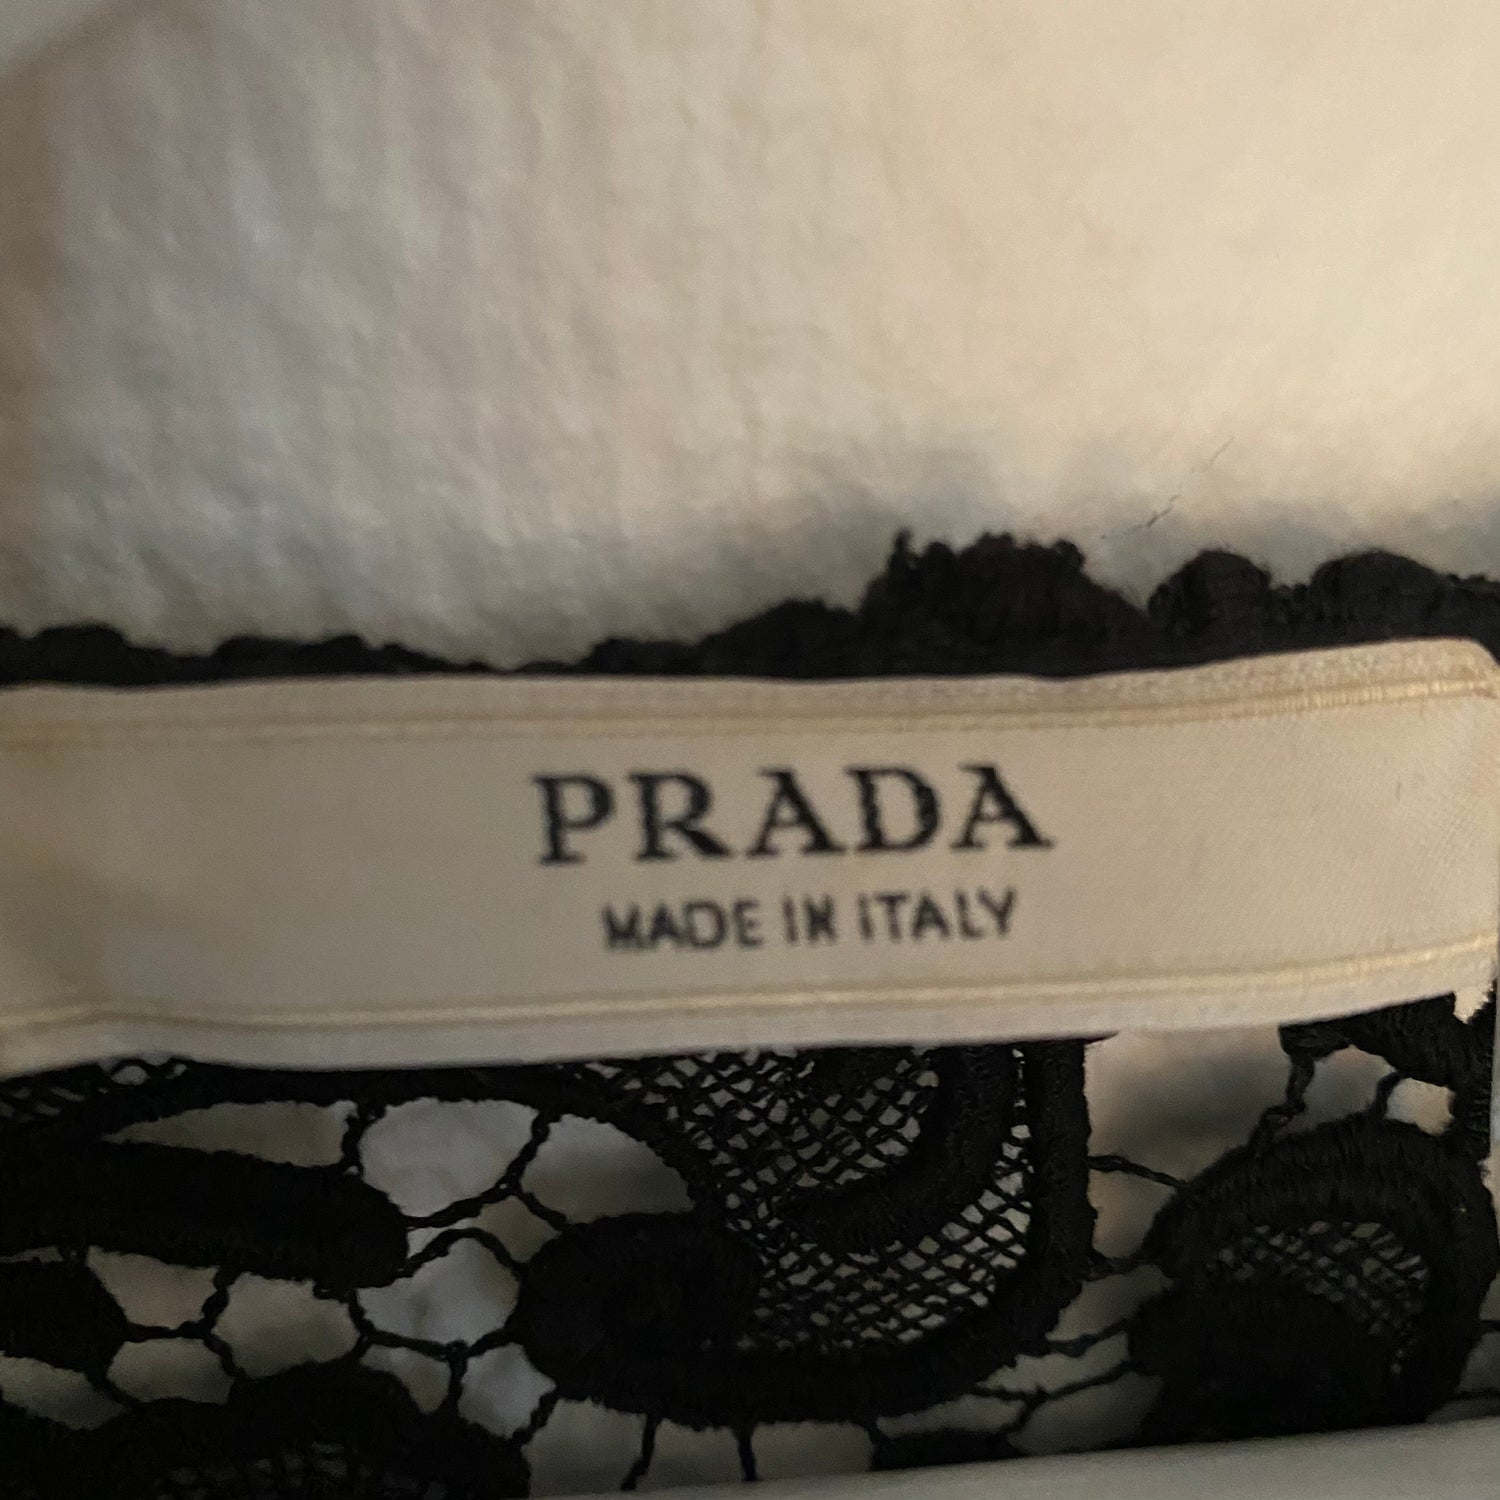 PRADA Knitwear vintage Lysis Paris pre-owned secondhand